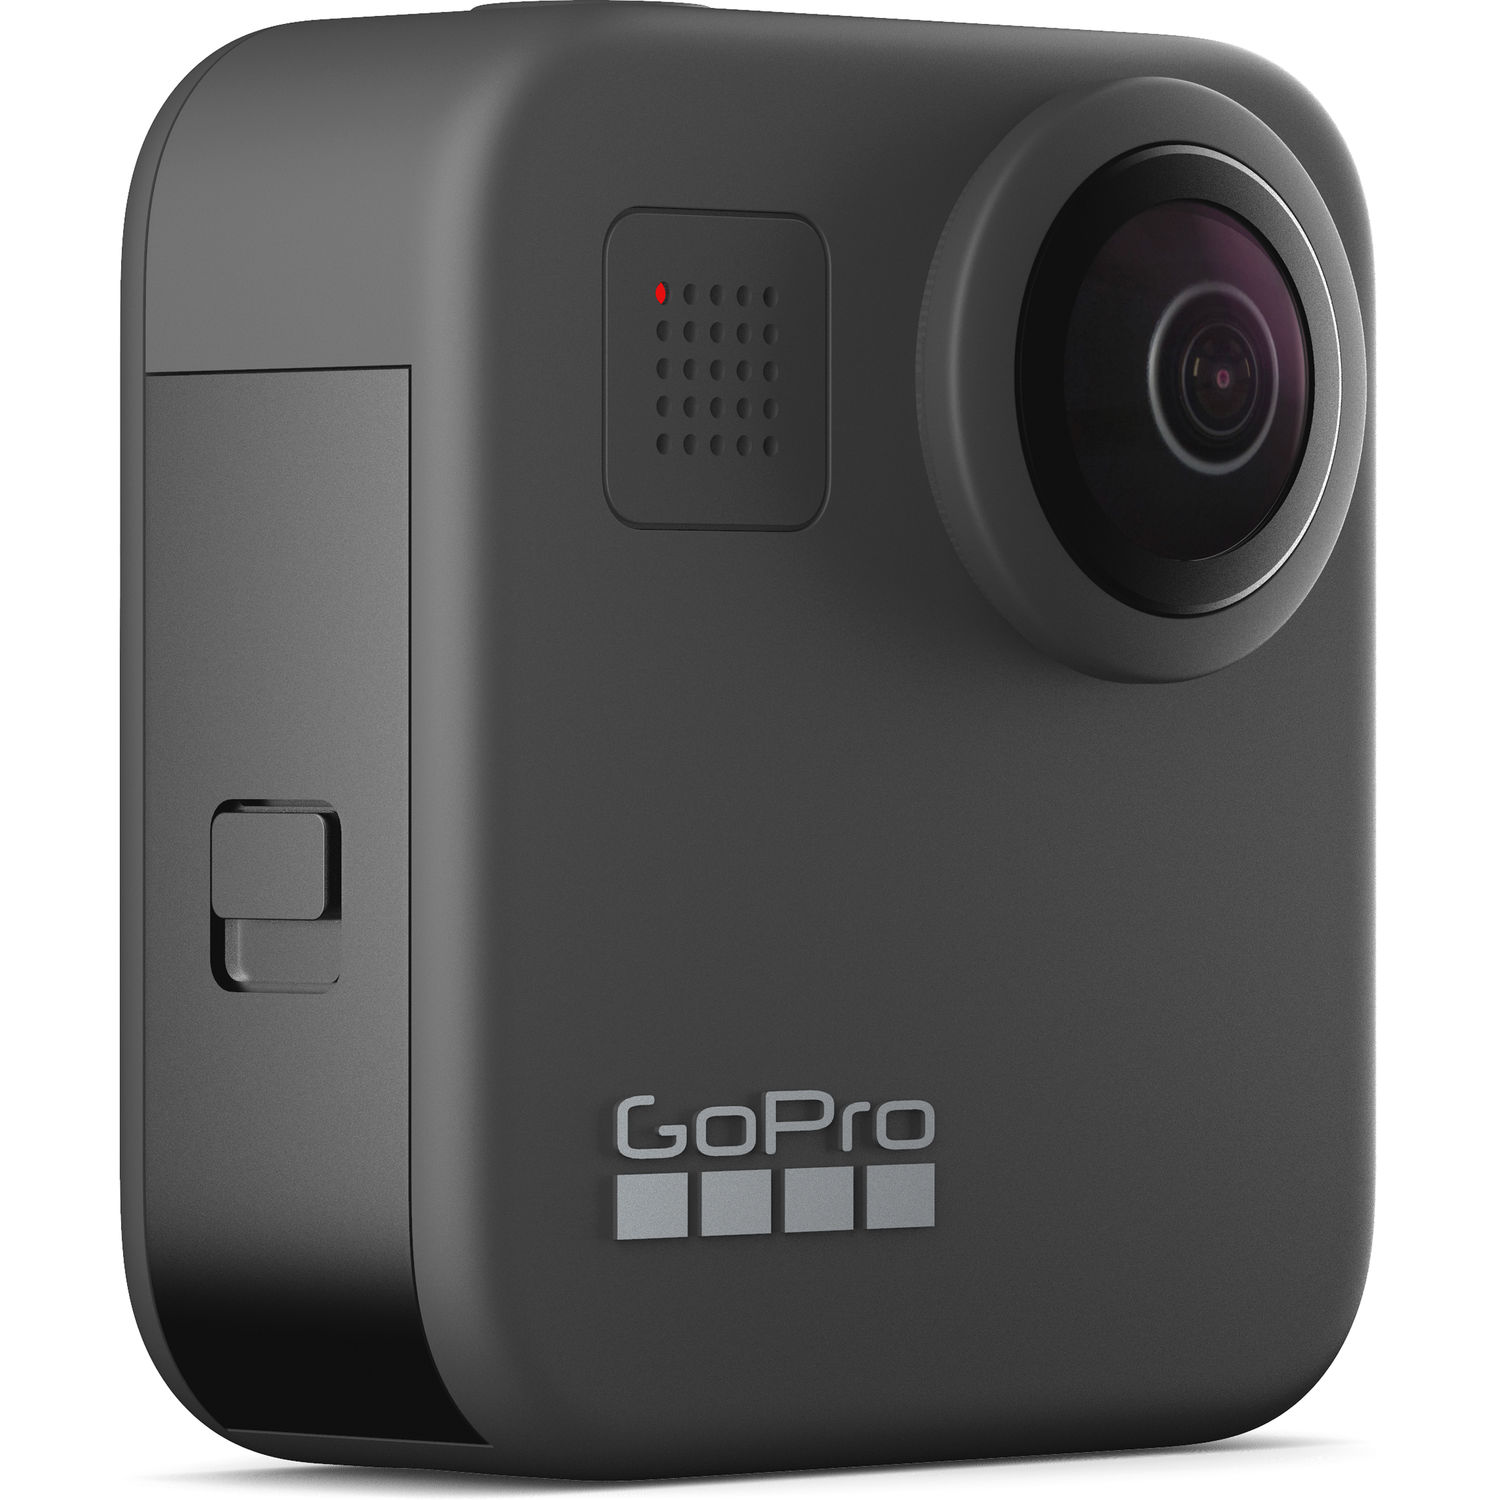 Gopro Max 360 Action Camera Chdhz 2 Xx B H Photo Video